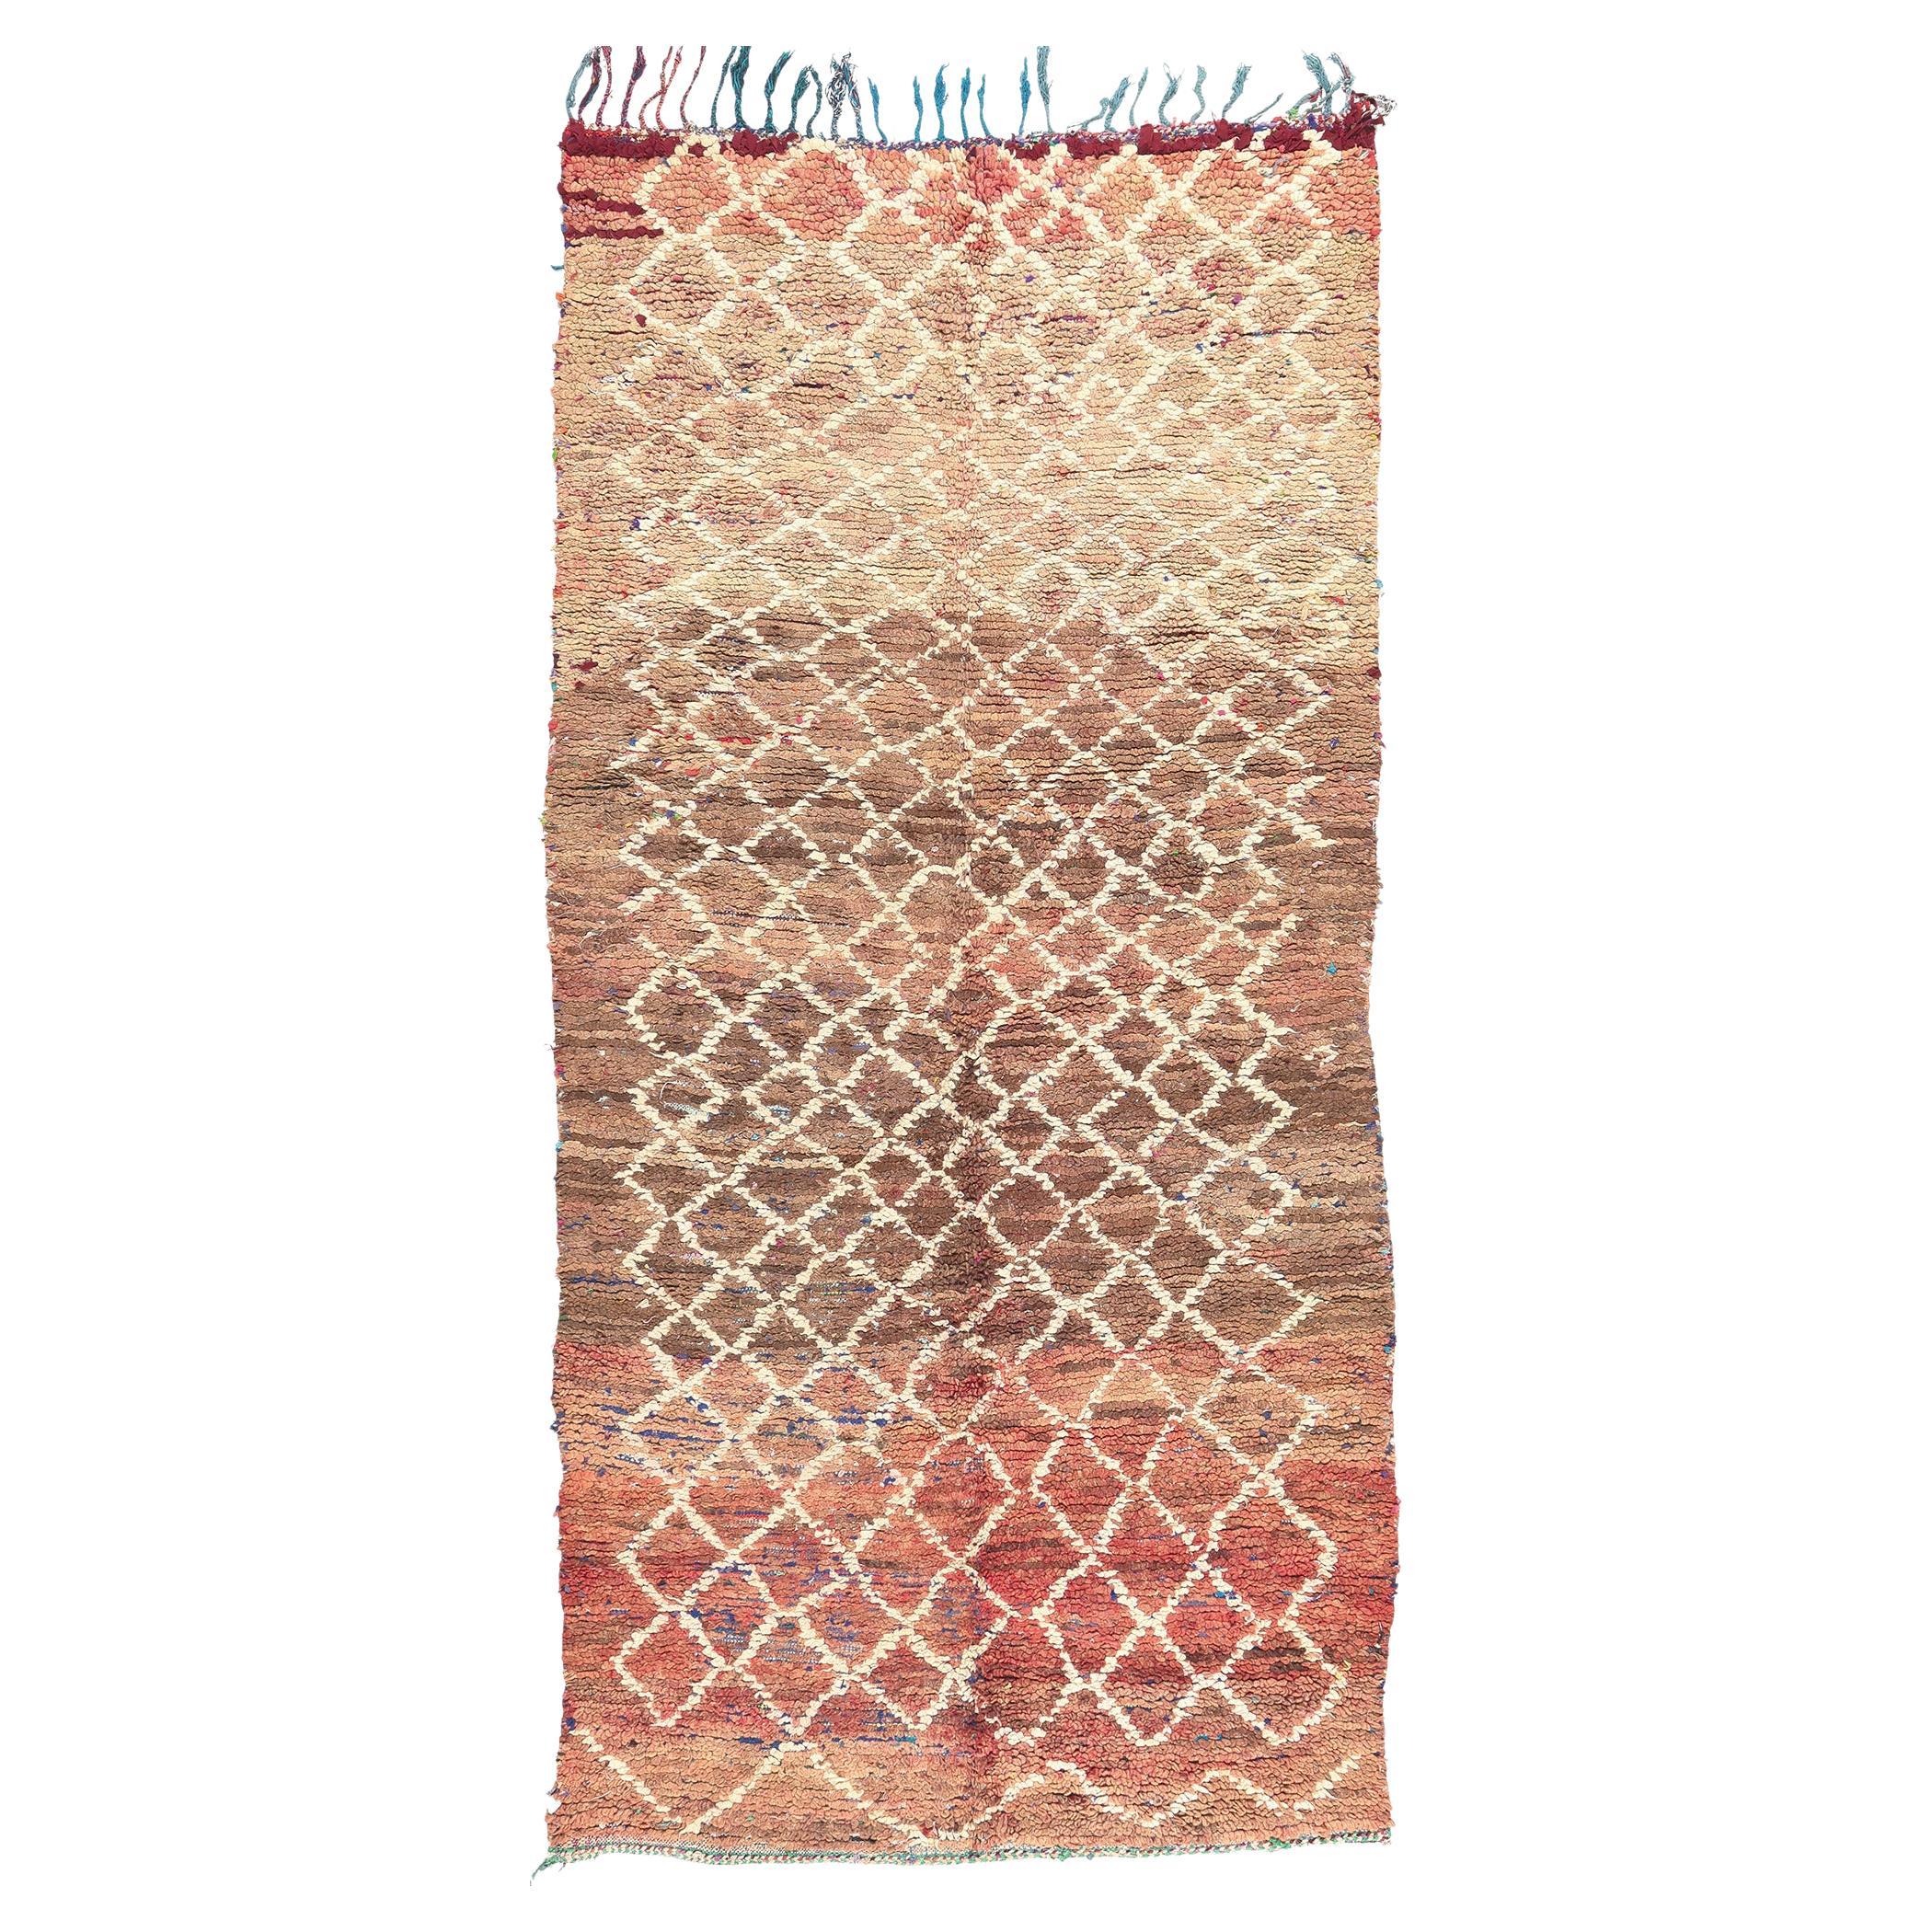 Vintage Boucherouite Moroccan Rag Rug